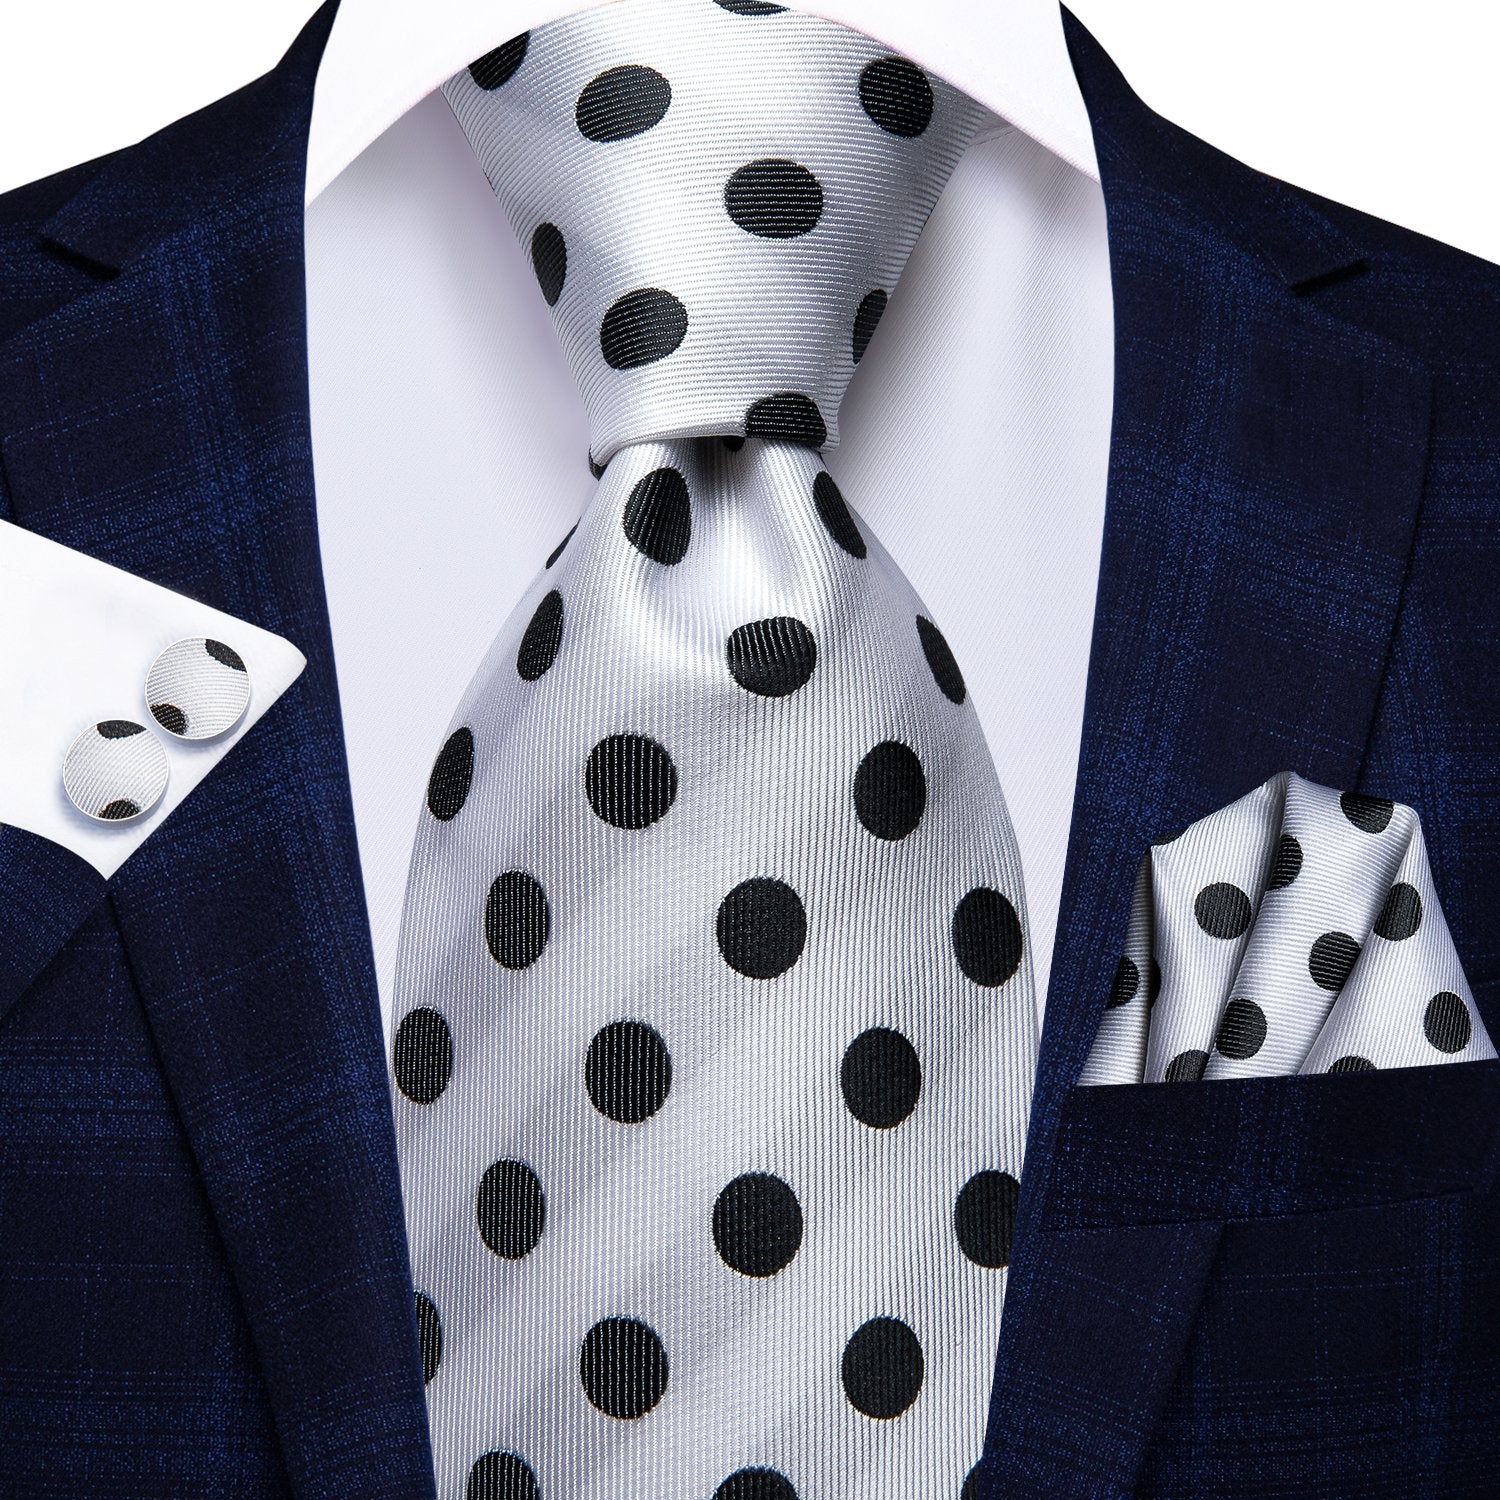 Black White Polka Dot Tie Handkerchief Cufflinks Set with Wedding Brooch